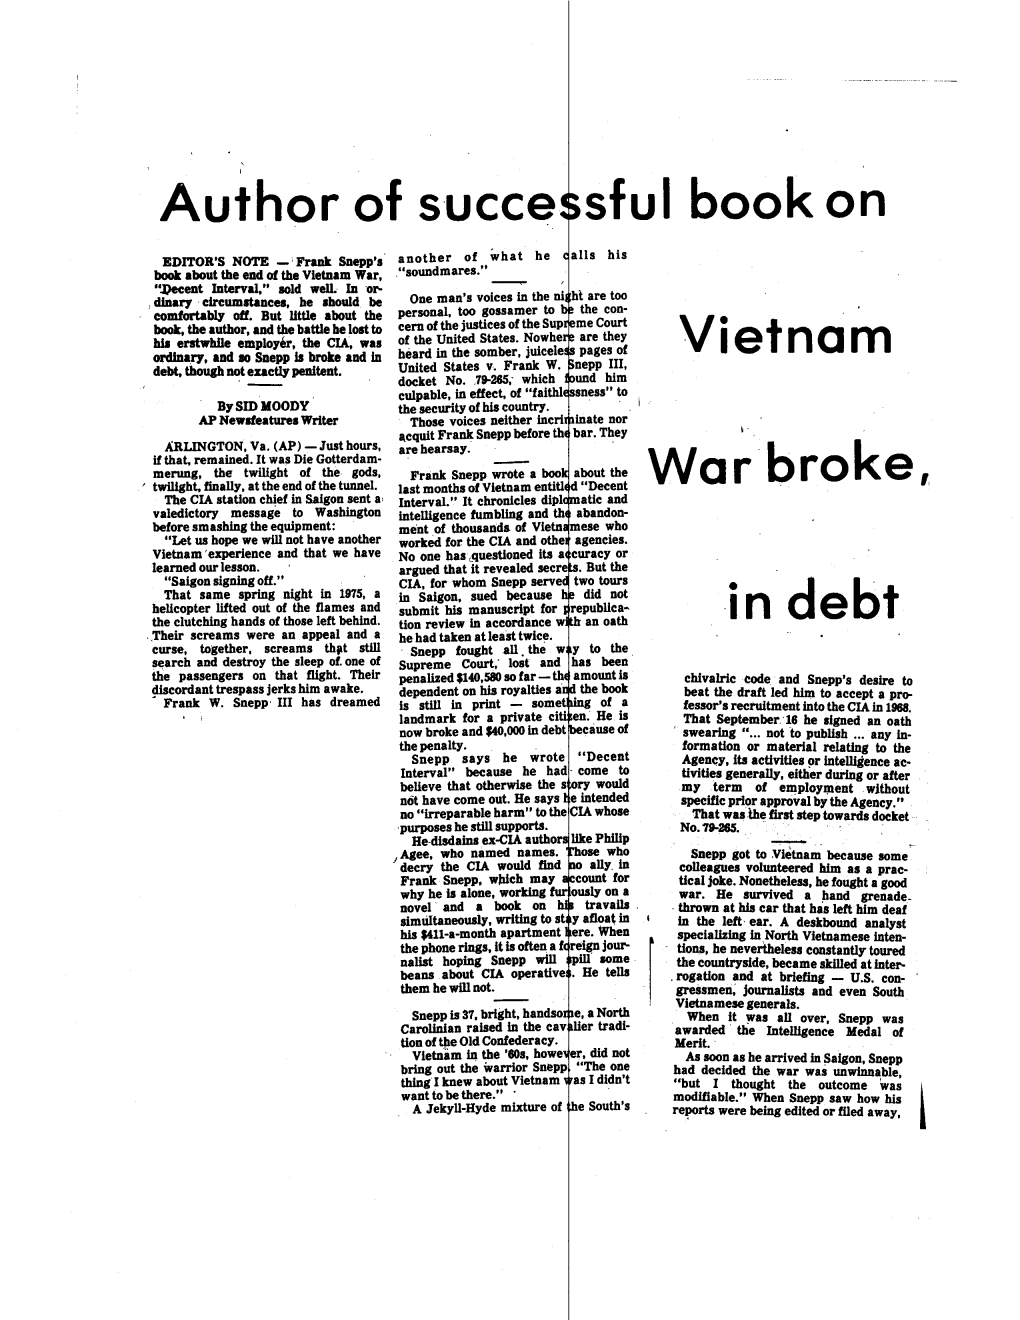 Author of Succe Sful Book on Vietnam War Broke, in Debt